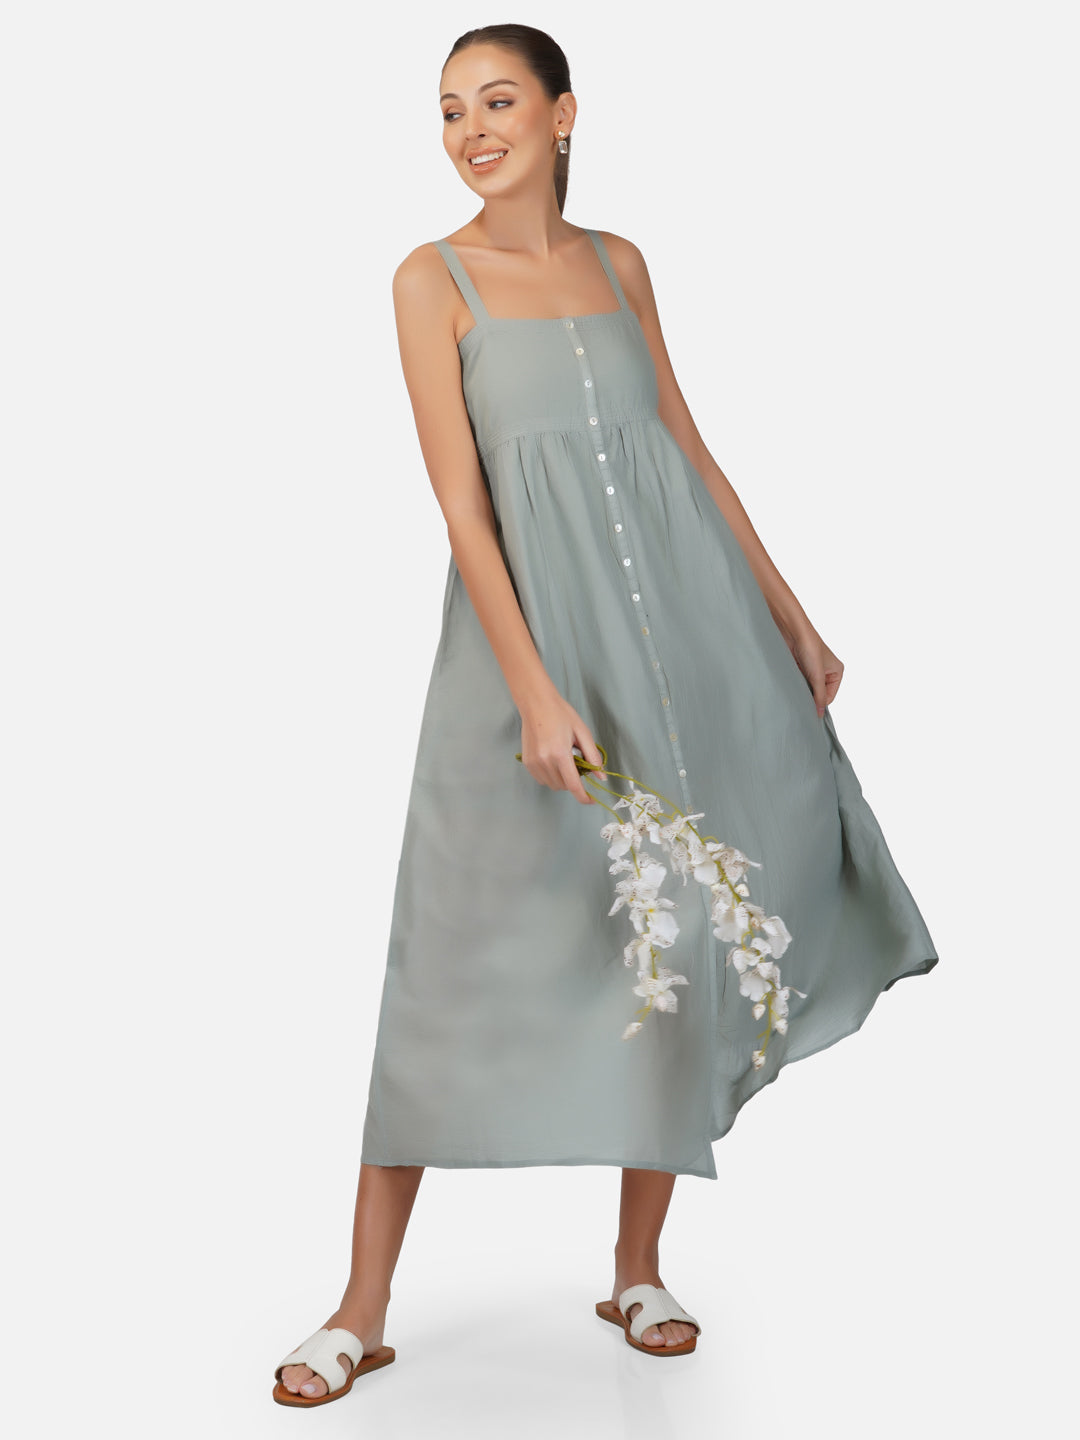 Porsorte Womens Cotton Voile Grey Casual Button Down Sleeveless Dress